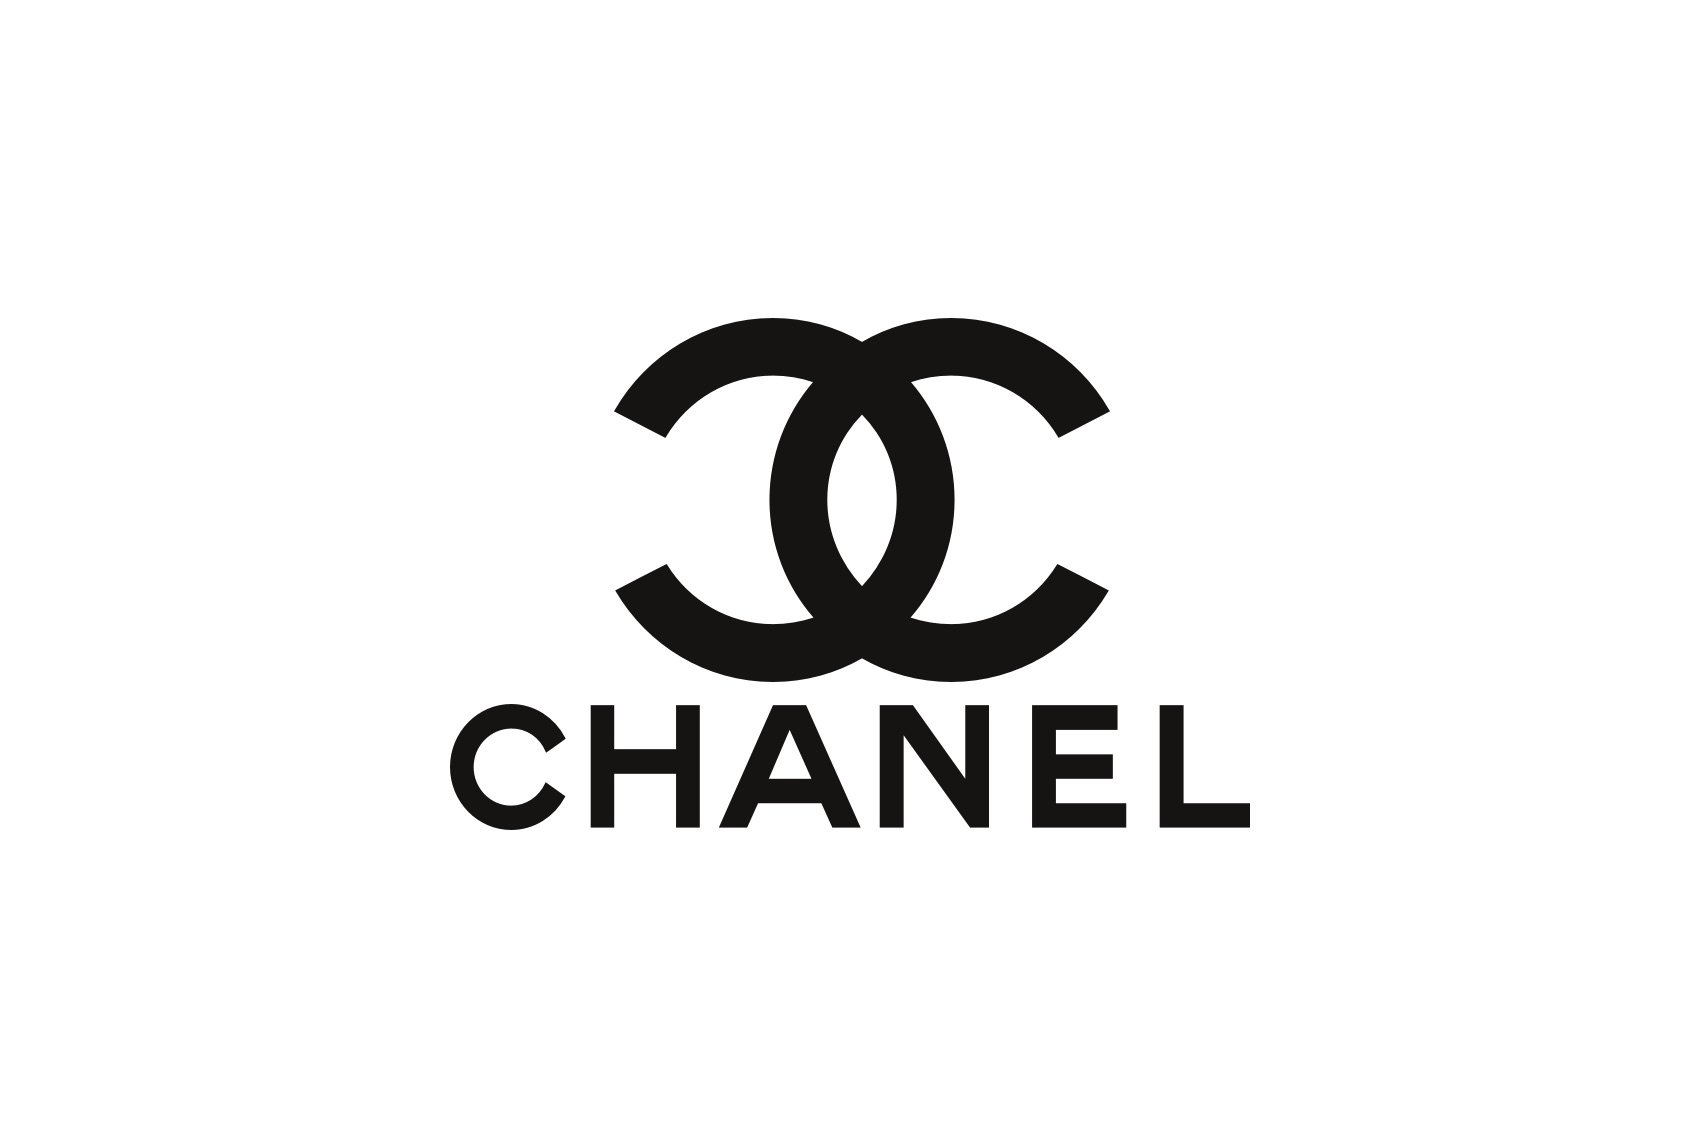 Chanel monogram logo